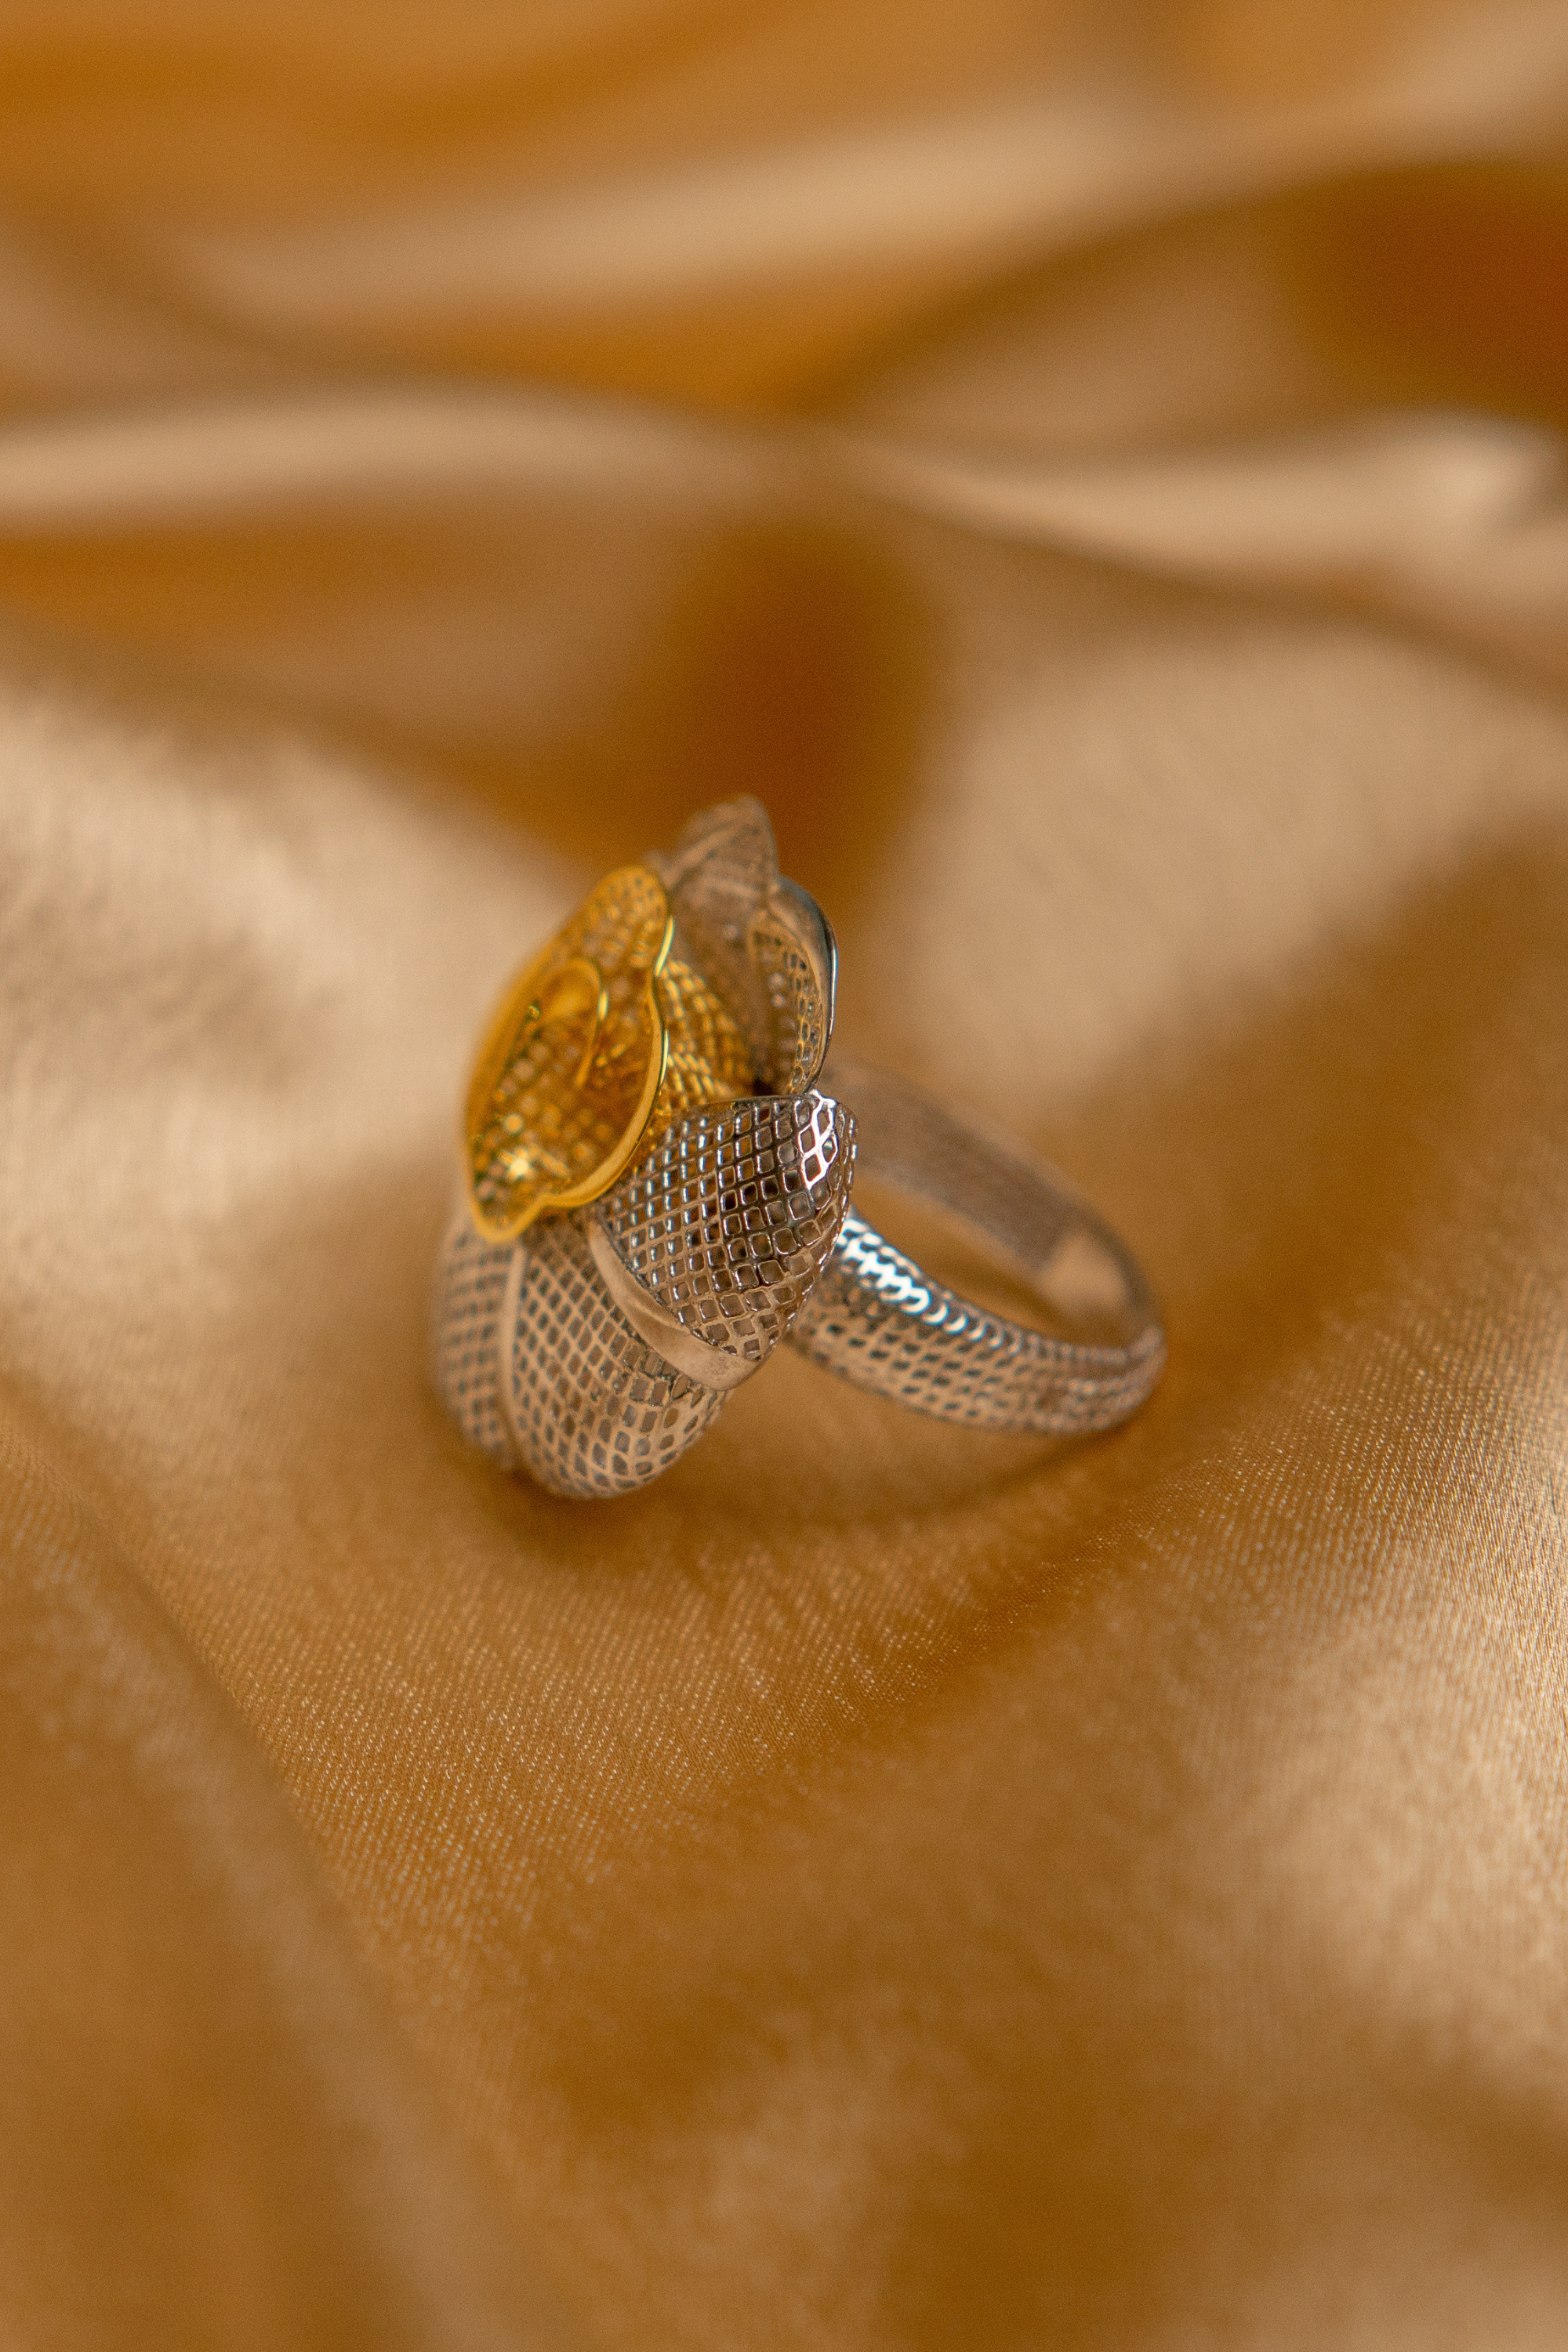 Unisex Designer Gold Ring at Rs 3500 in New Delhi | ID: 14451170191